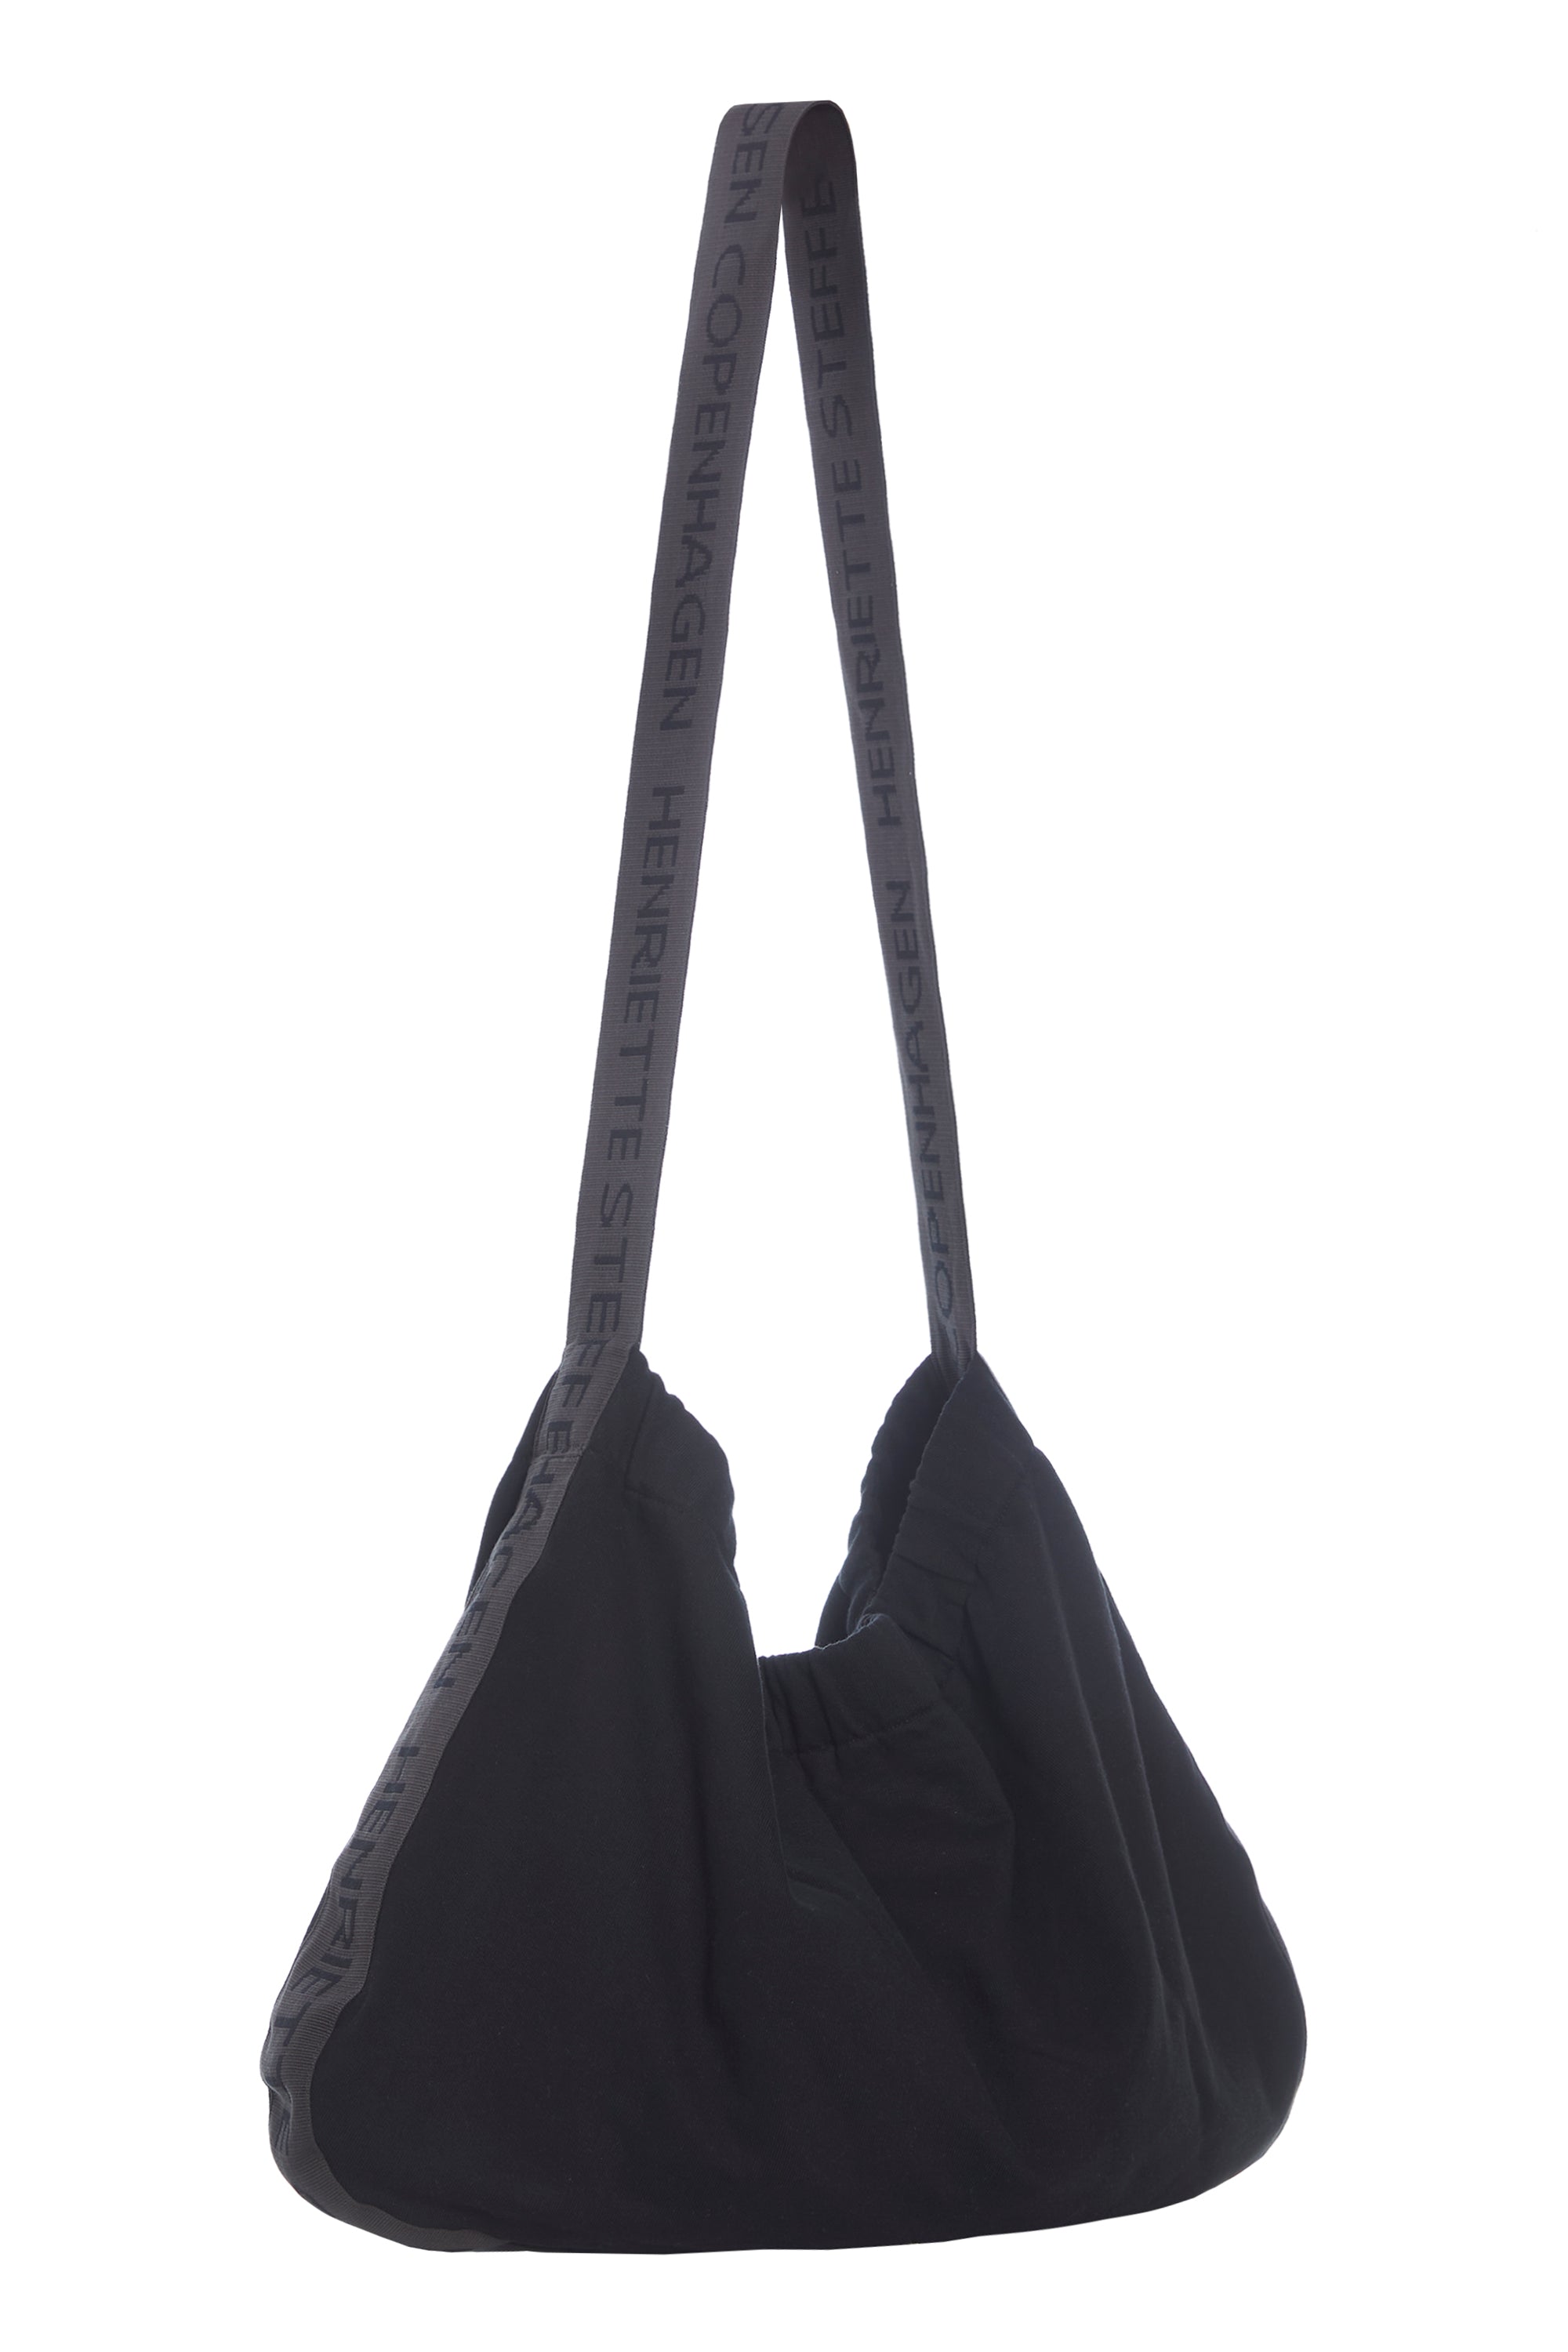 HENRIETTE STEFFENSEN COPENHAGEN BAG - 74501 BAGS cotton BLACK 900